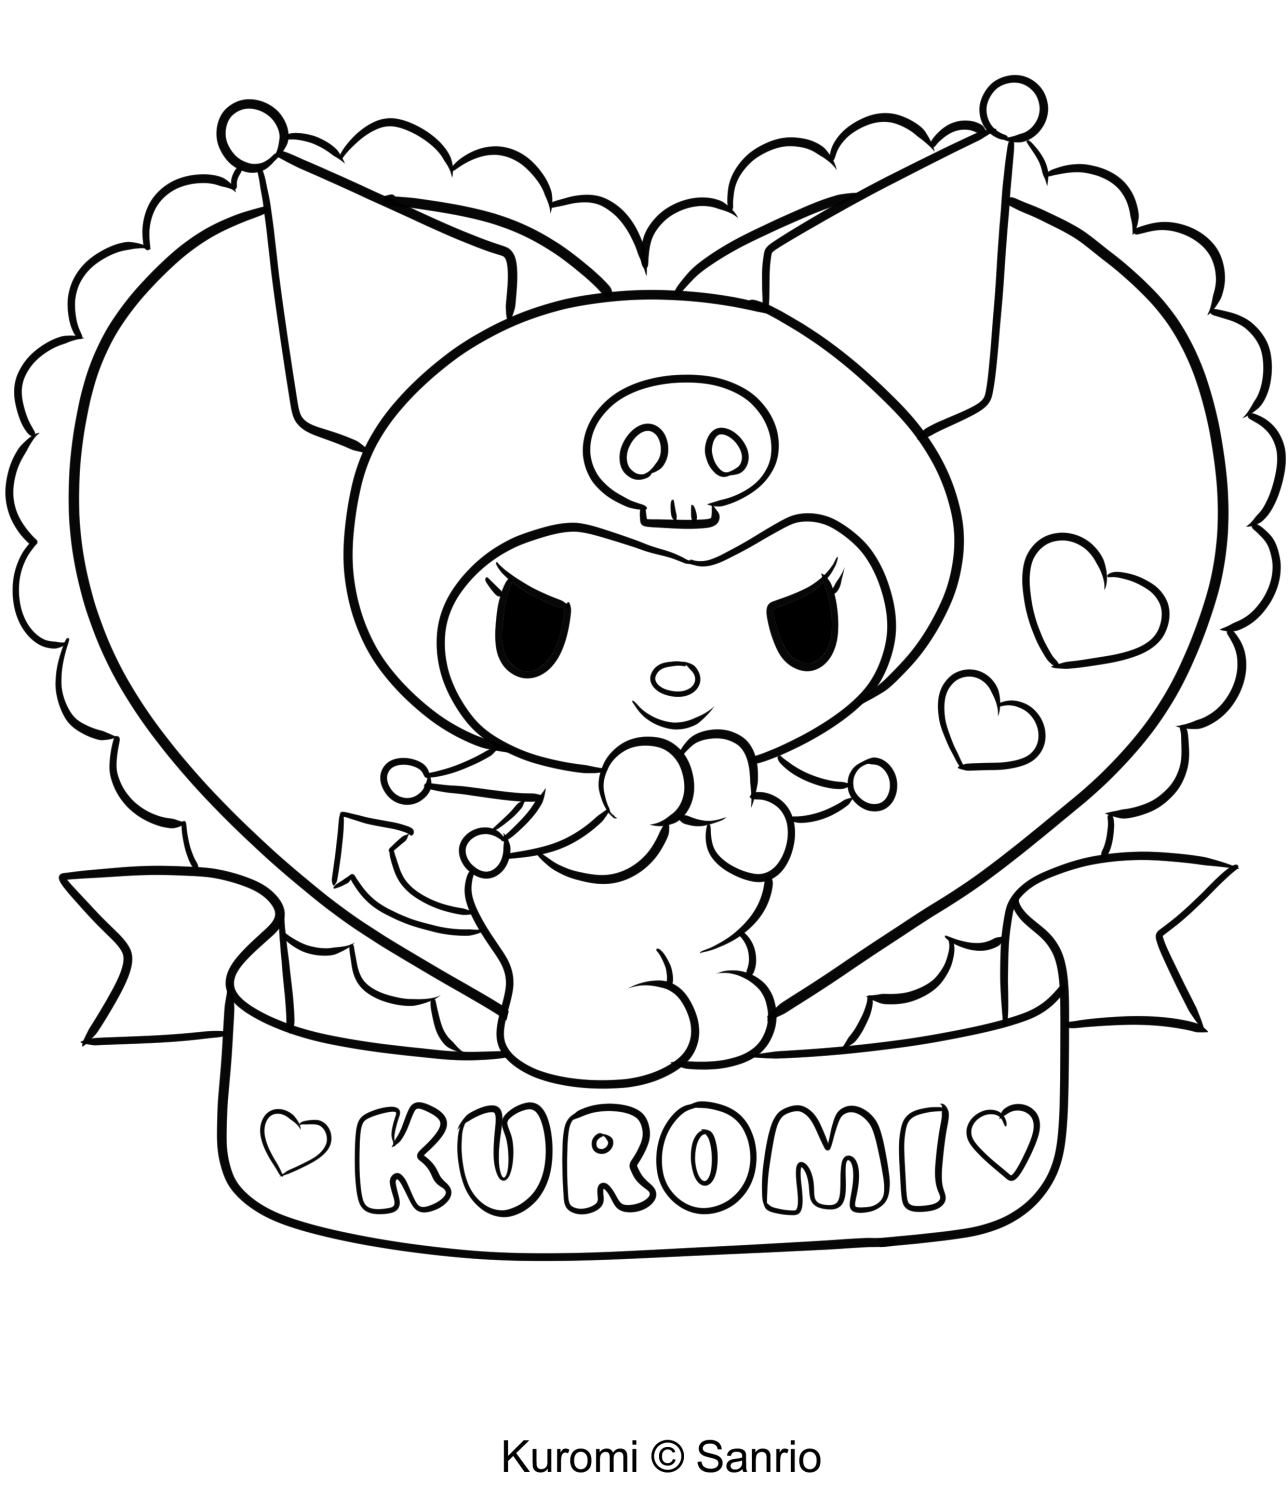 Kuromi 24 daripada halaman pewarna My Melody untuk dicetak dan diwarnakan